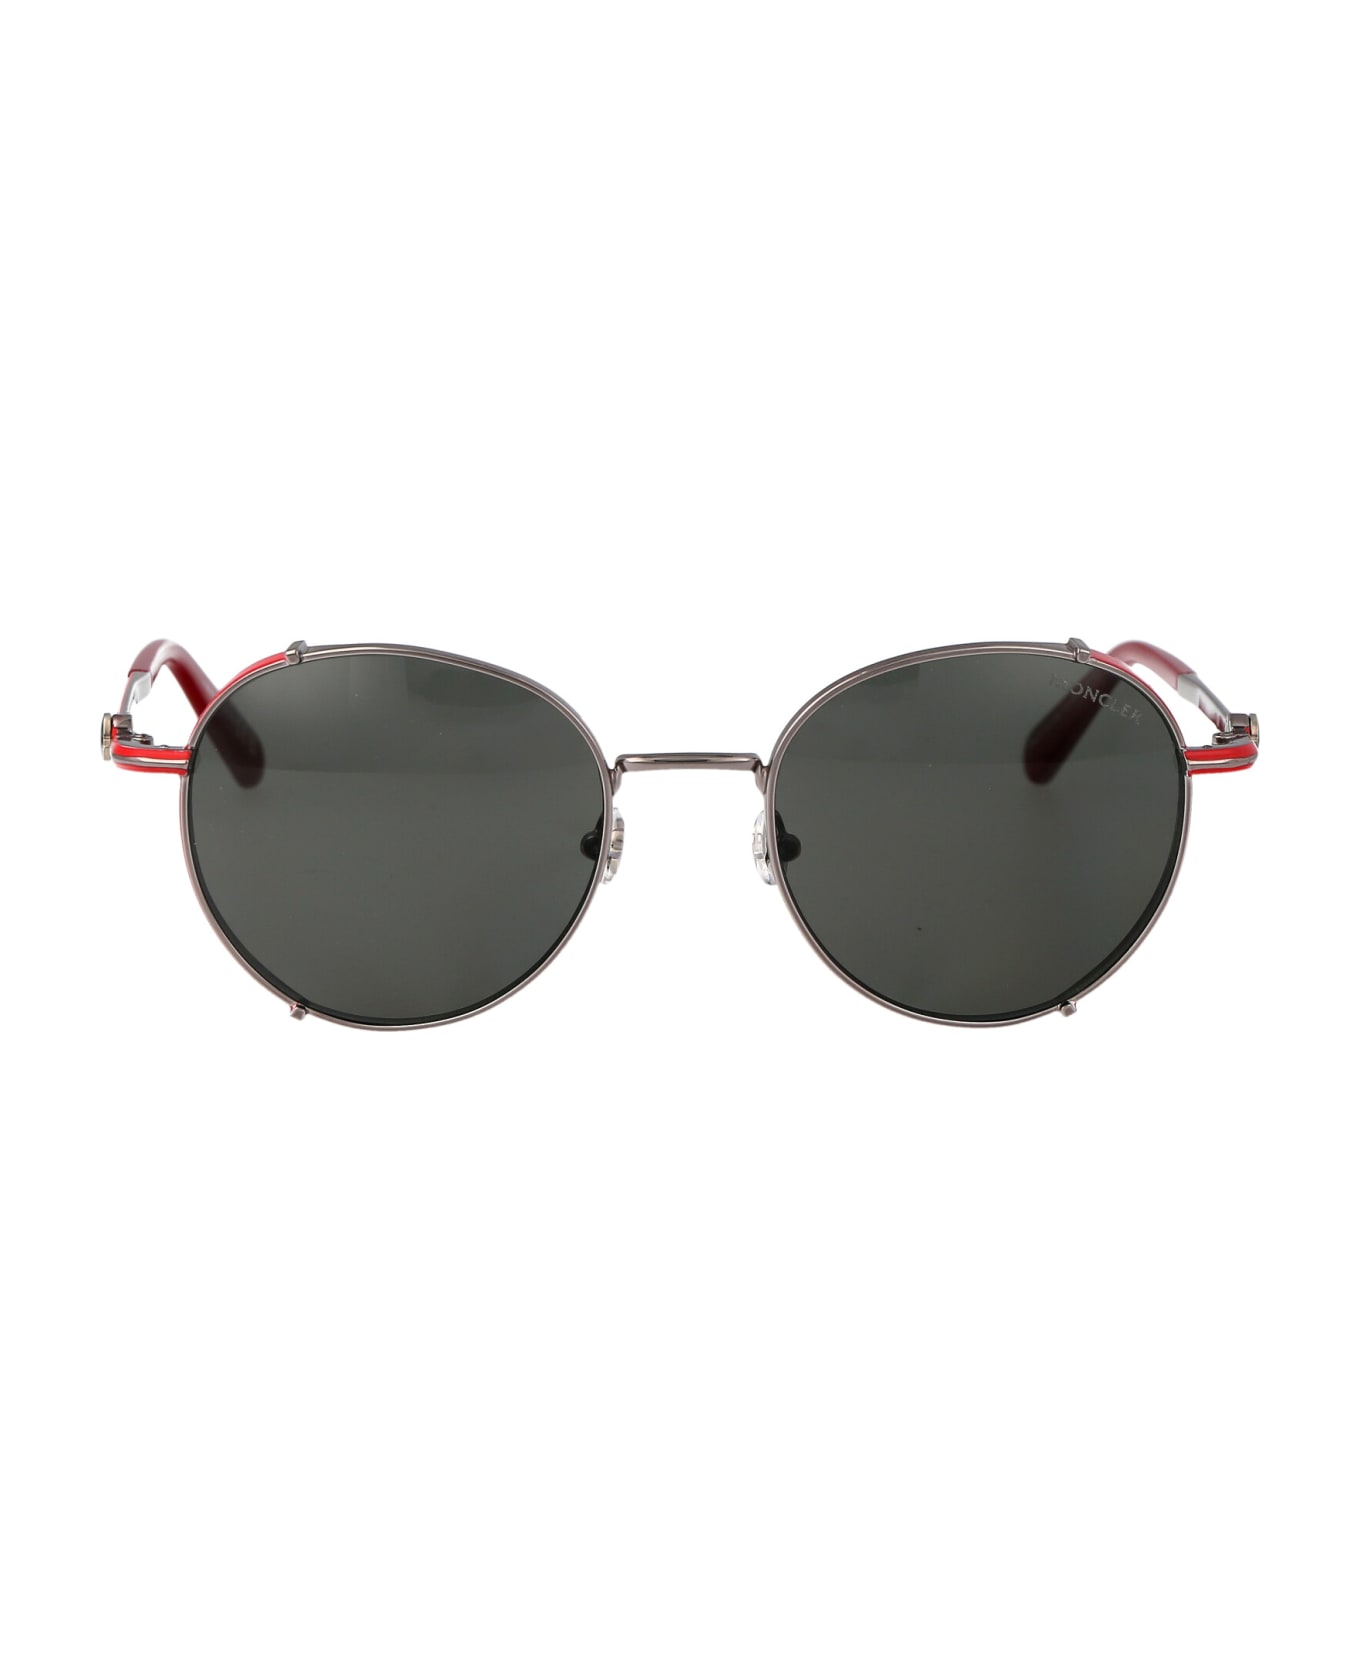 Moncler Eyewear Ml0286 Sunglasses - 14 Rutenio Chiaro Lucido サングラス